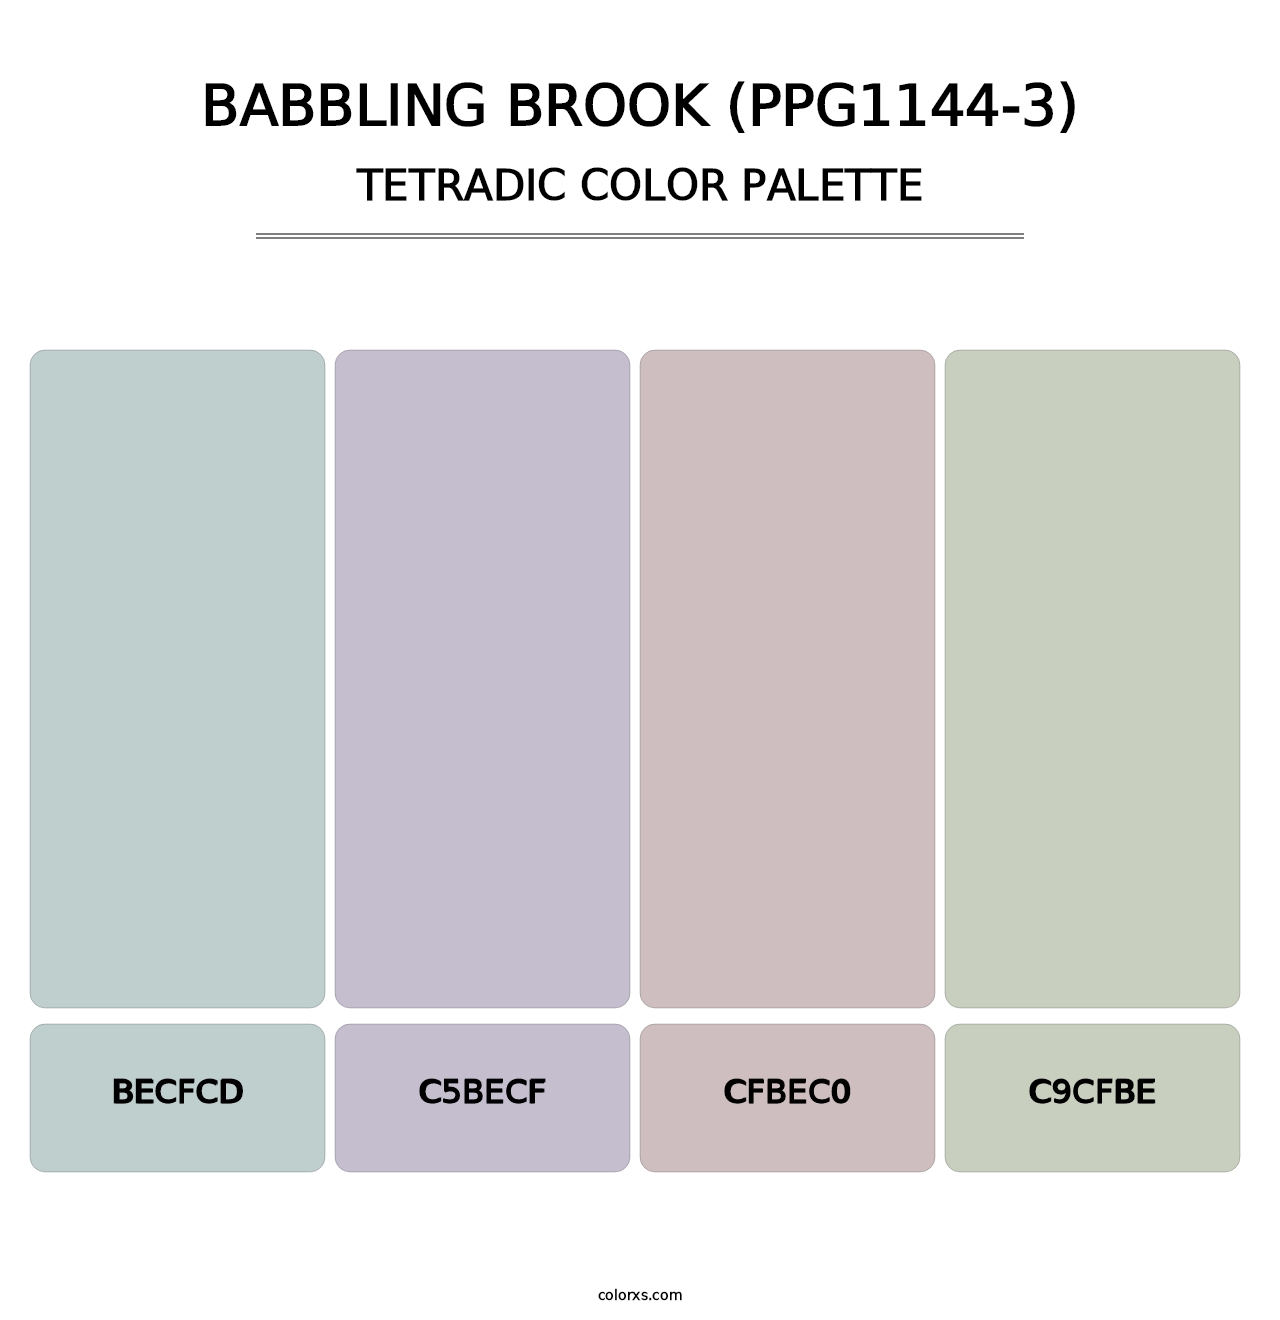 Babbling Brook (PPG1144-3) - Tetradic Color Palette